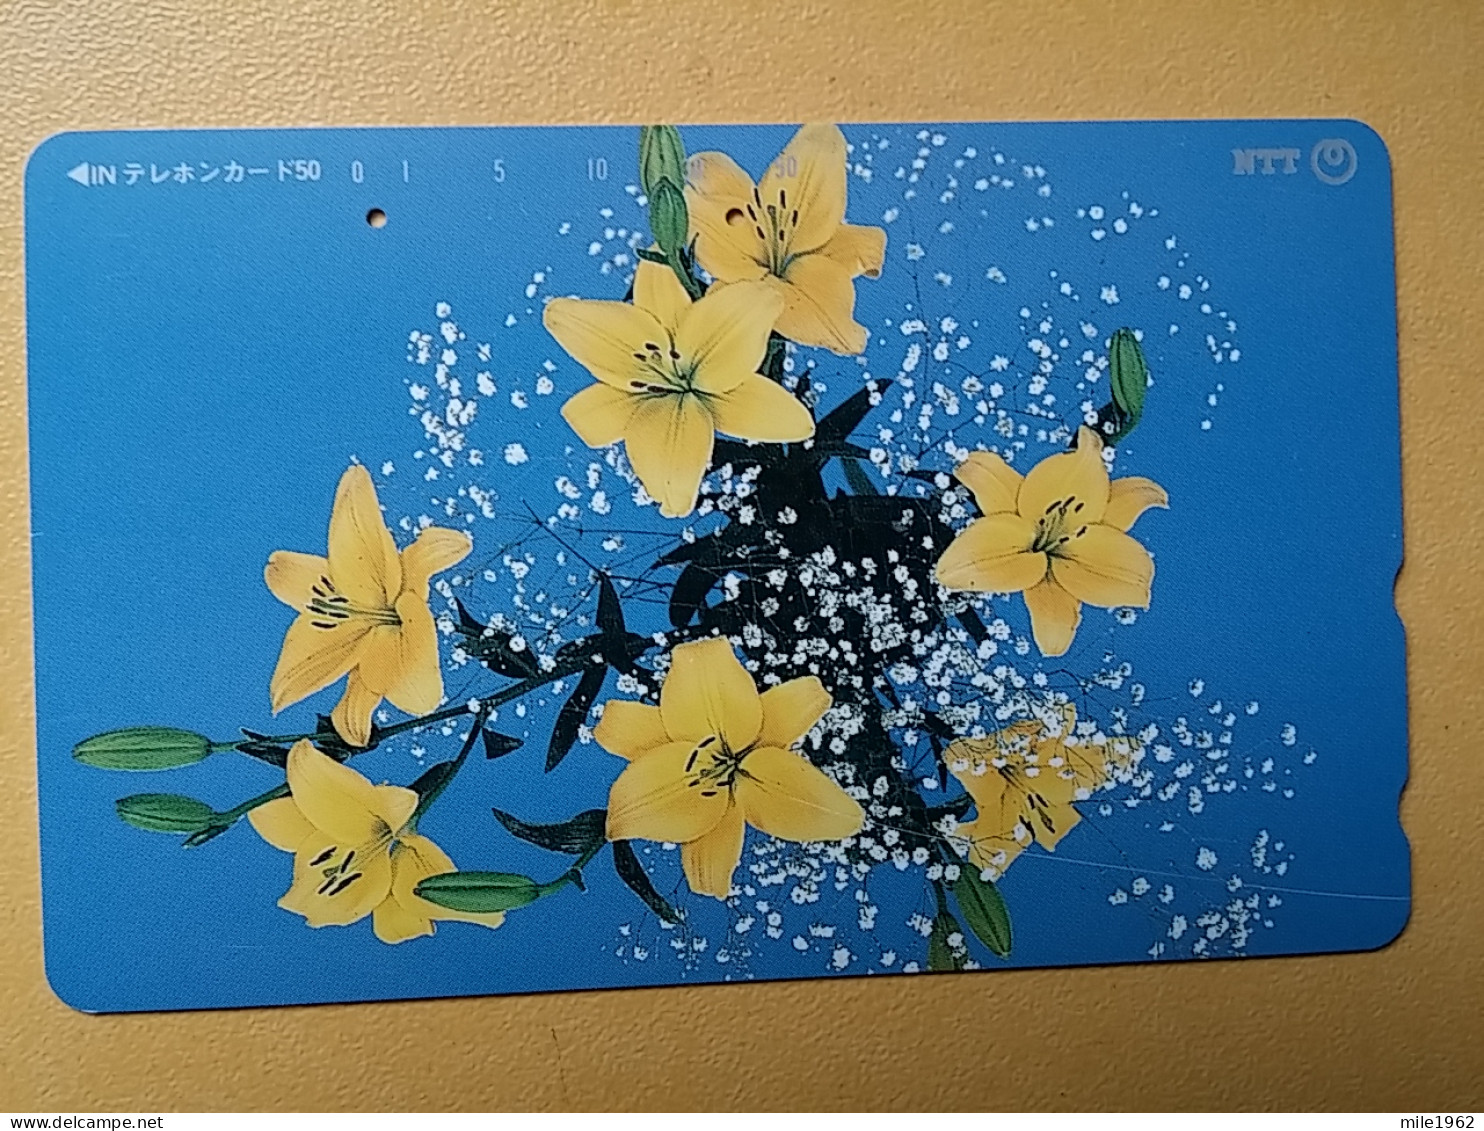 T-384 - JAPAN, Japon, Nipon, TELECARD, PHONECARD, Flower, Fleur, NTT 231-183 - Blumen